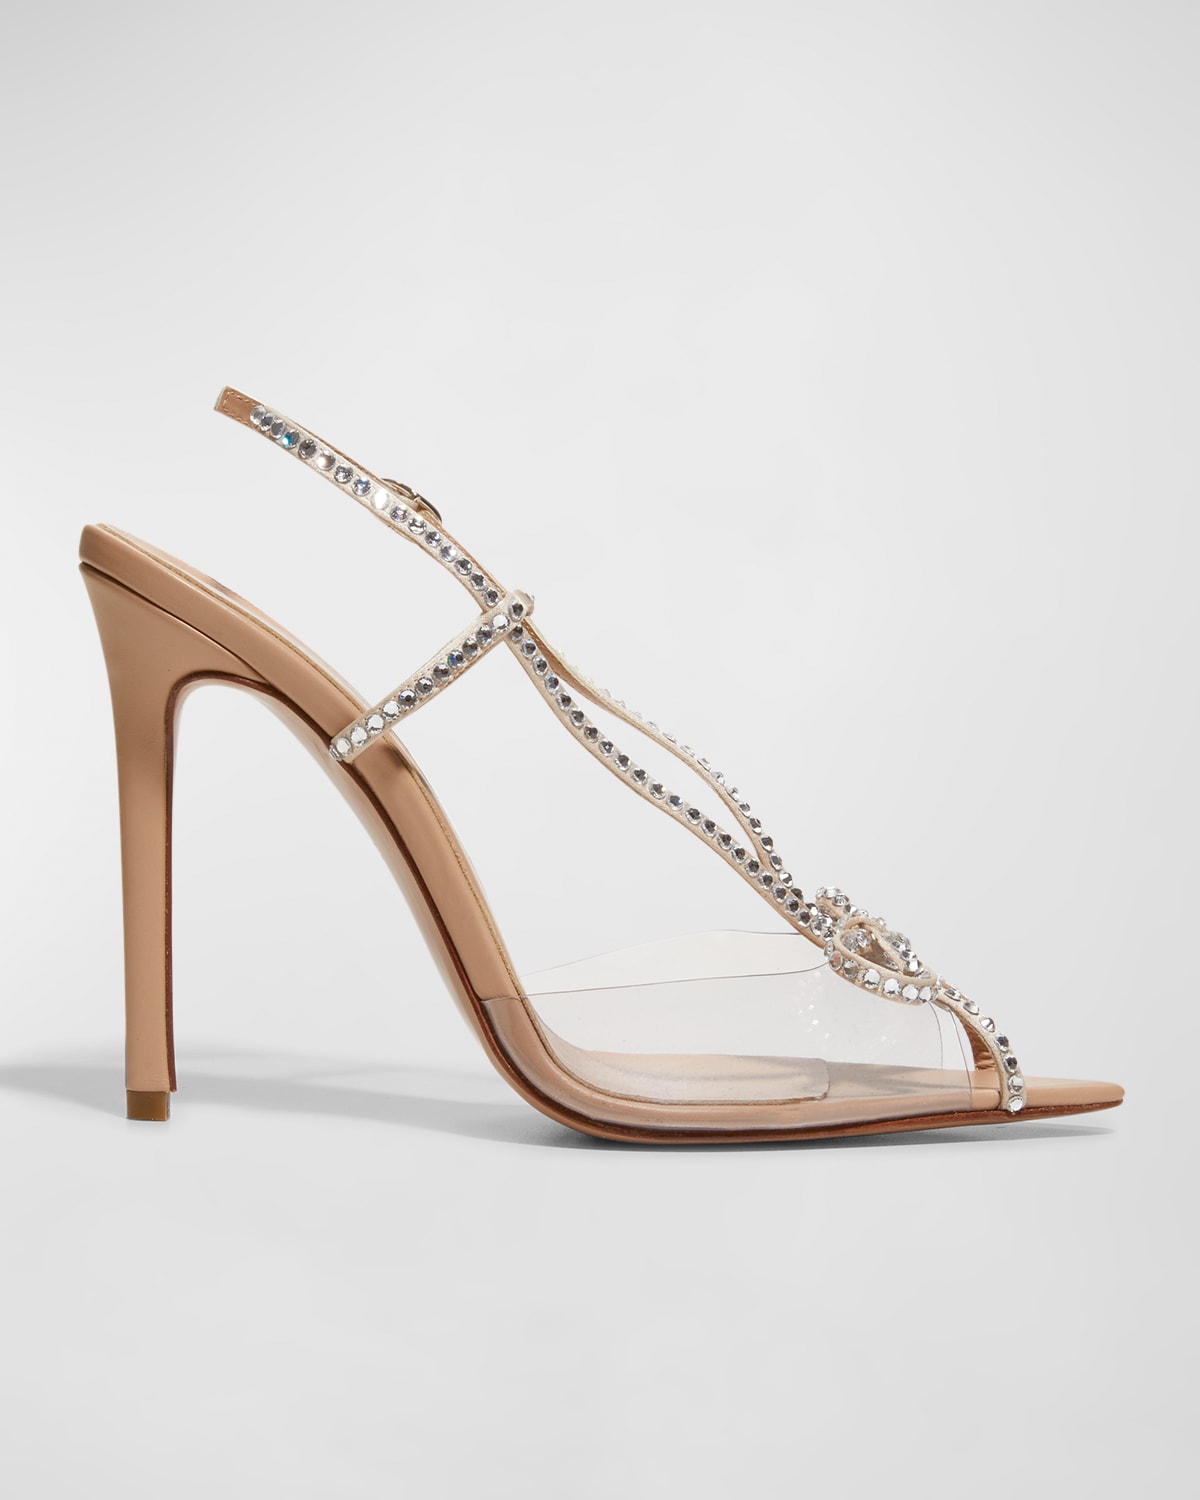 Swarovski Crystals Shoes | Neiman Marcus